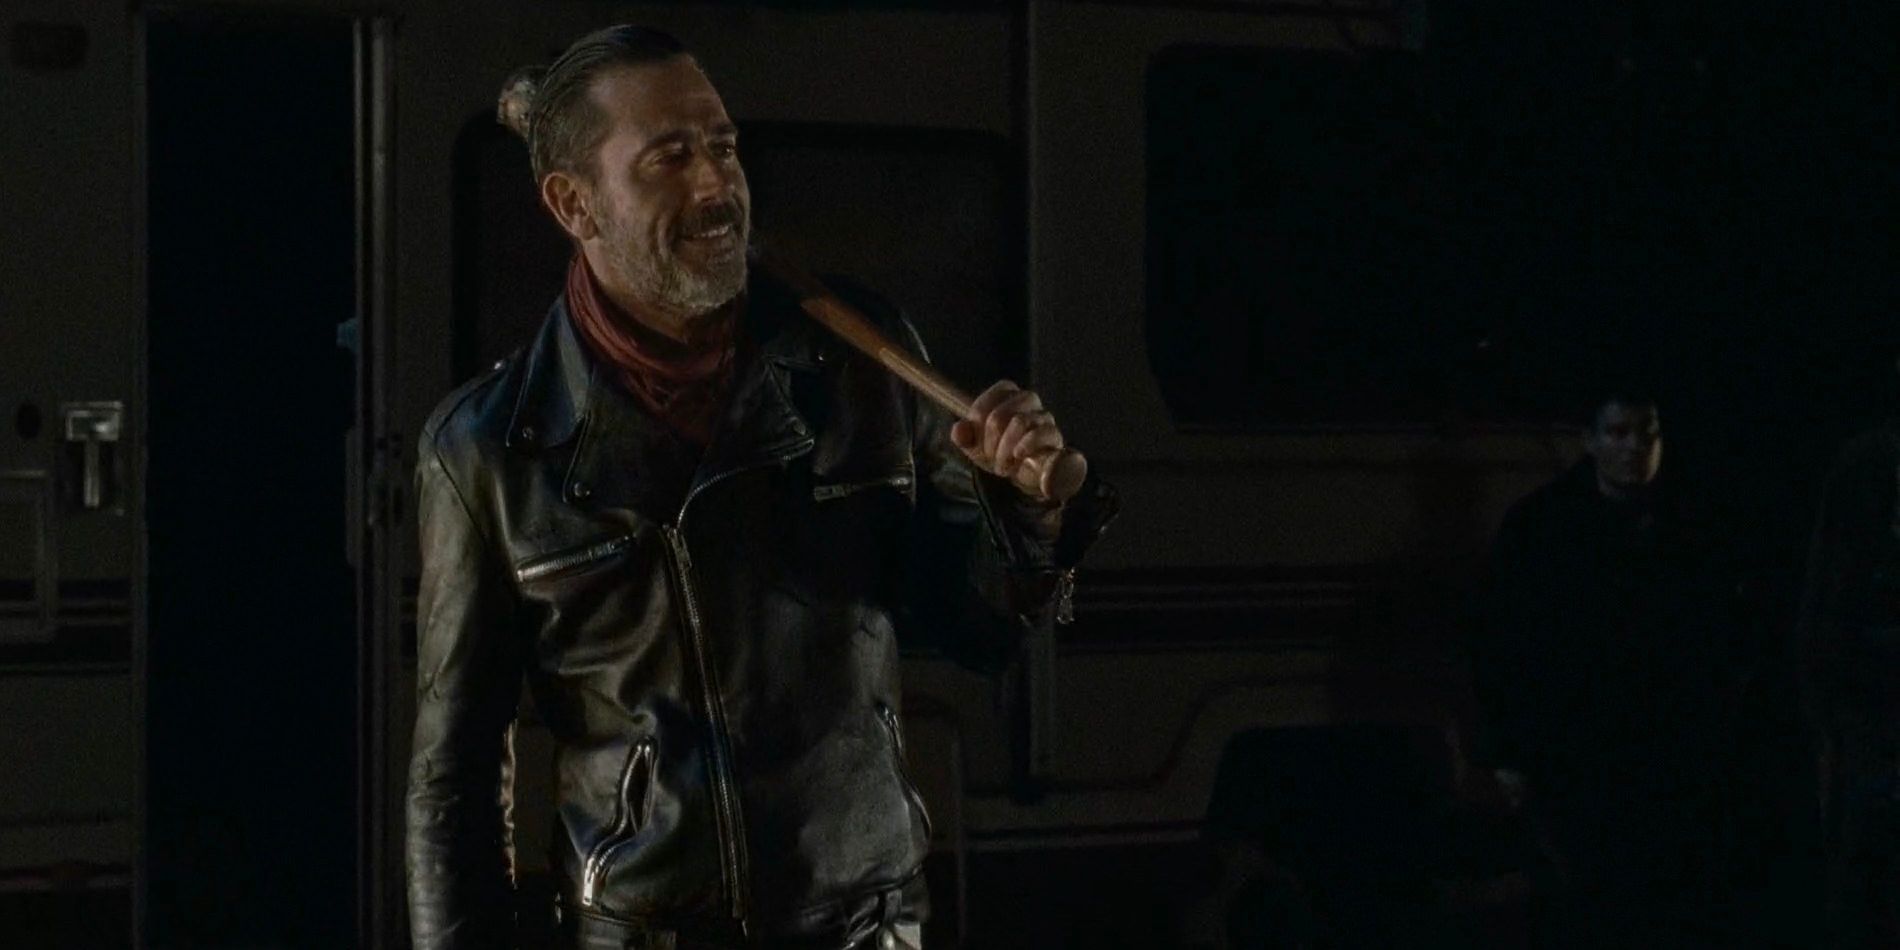 Negan (Jeffrey Dean Morgan) exits his camper van with a wry grin and his baseball bat Lucille over his shoulder. 